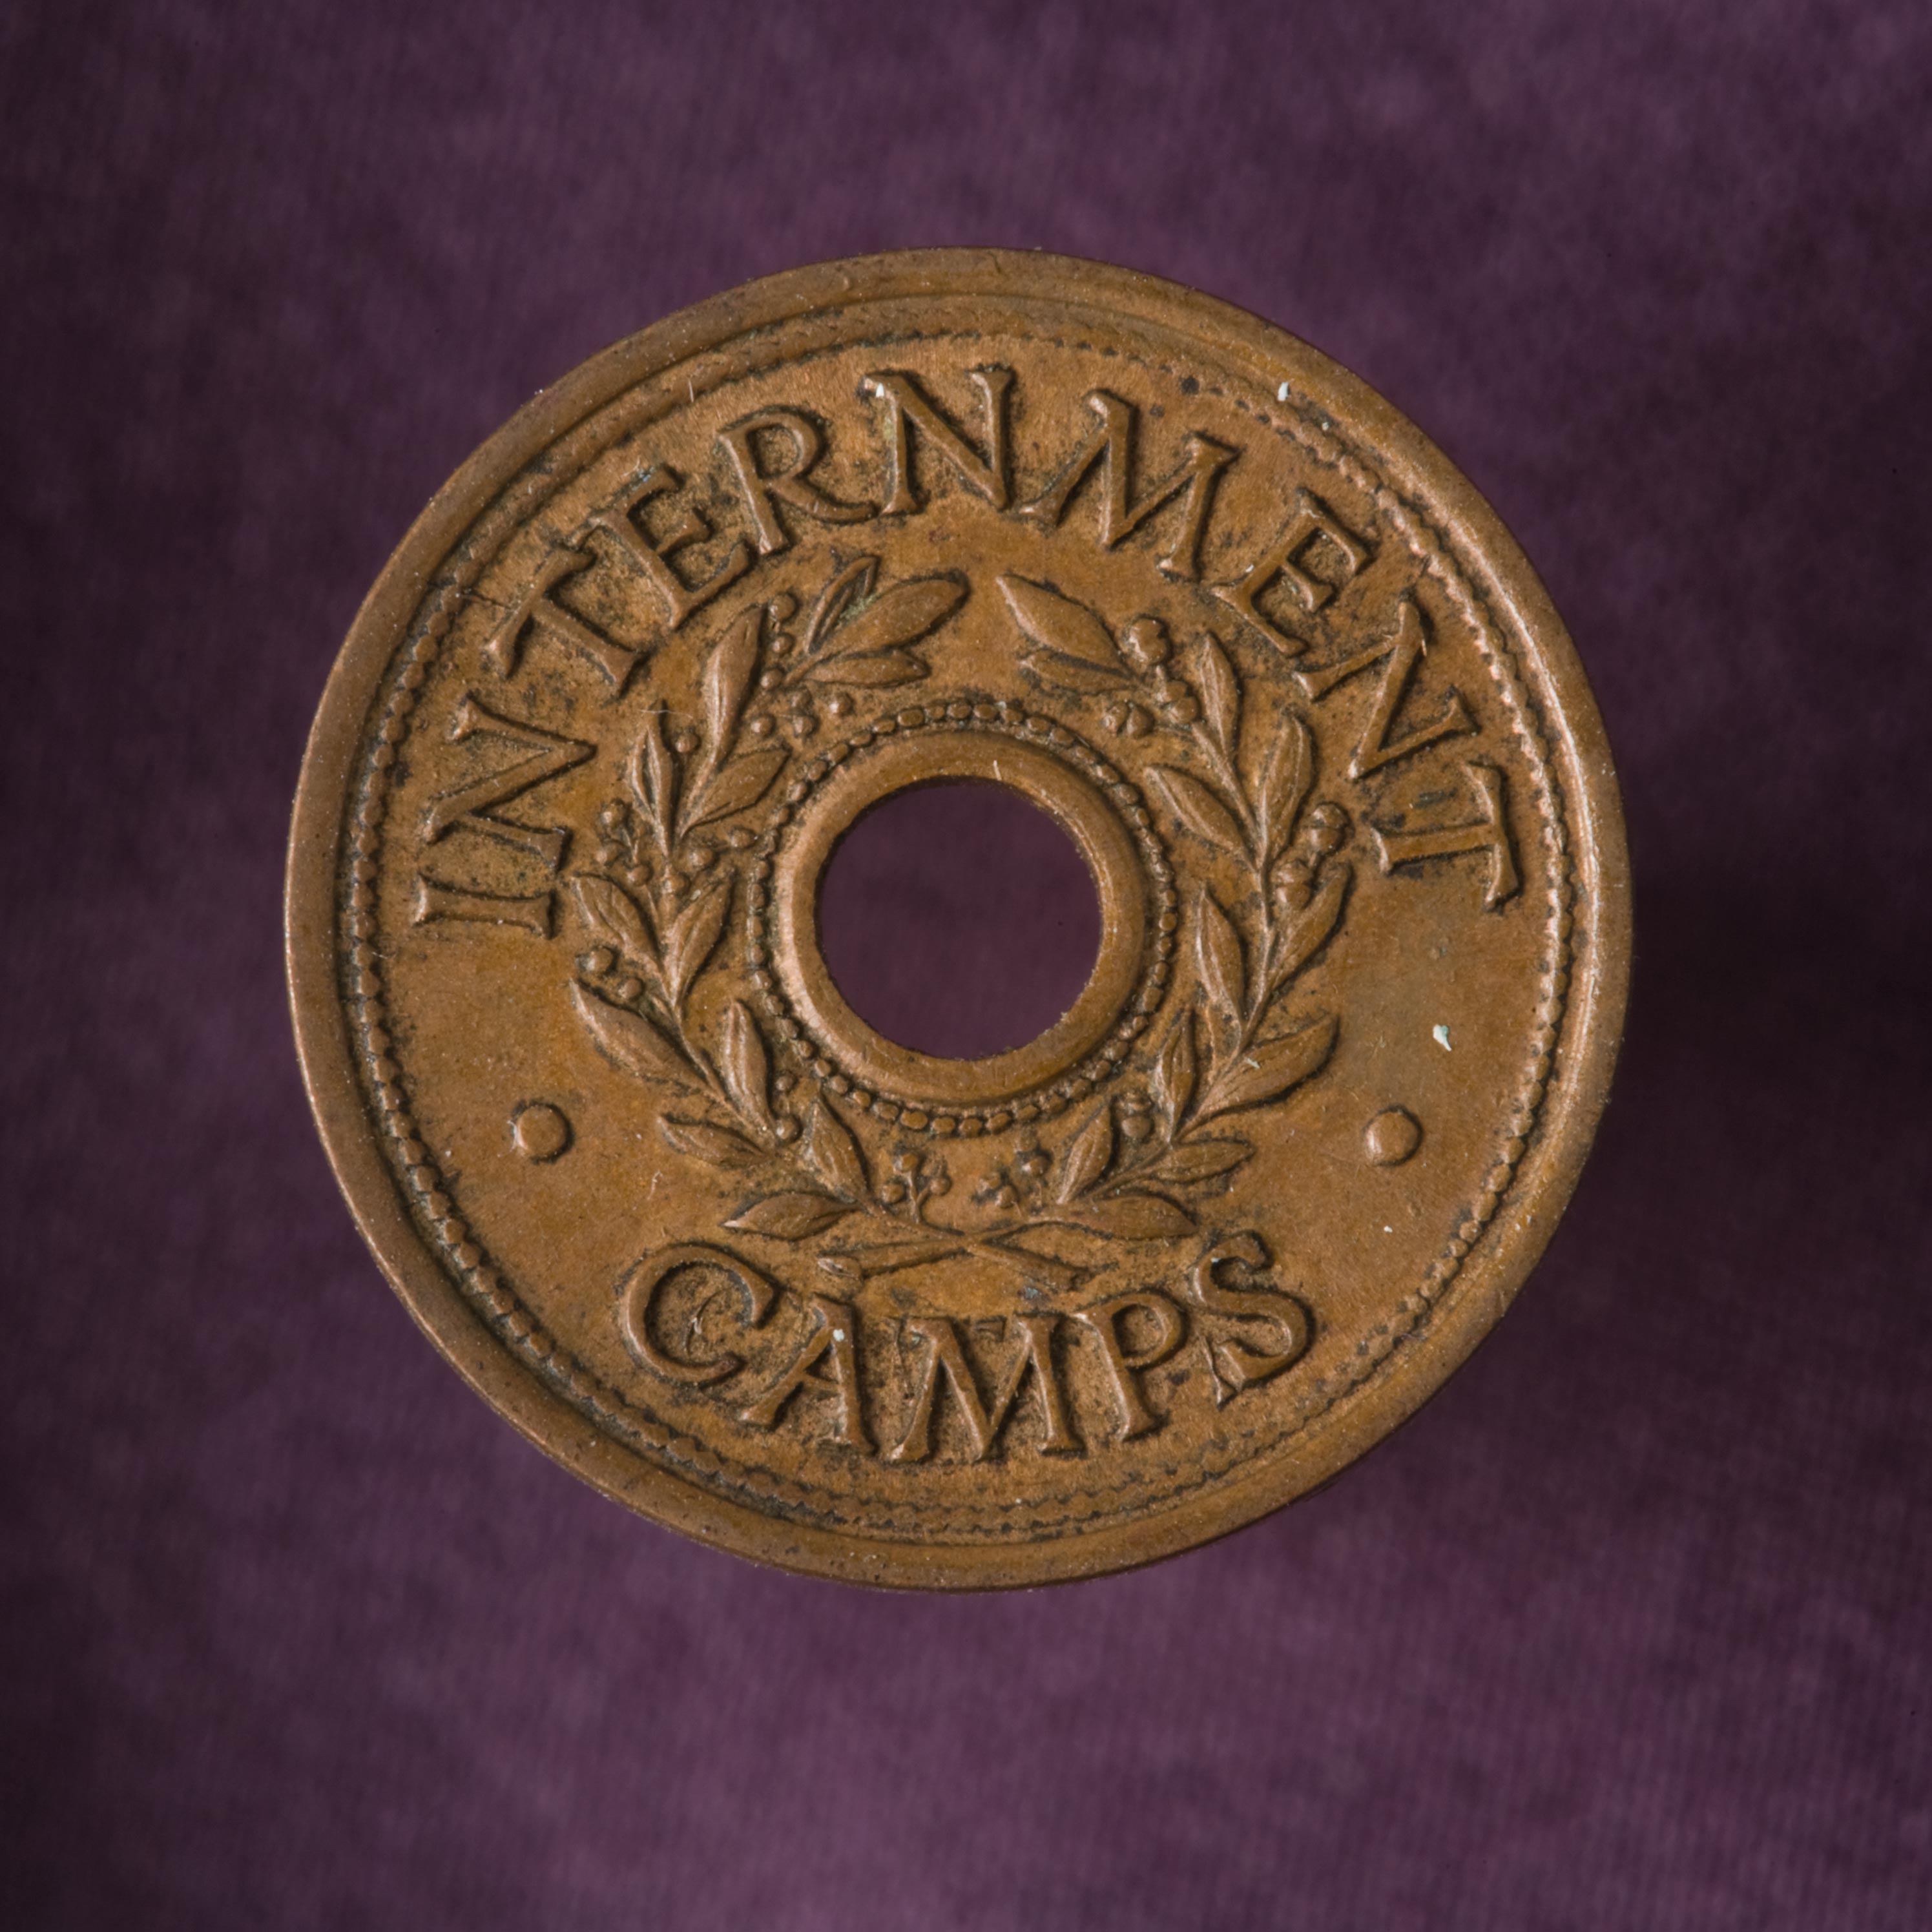 Second World War internment camp token.